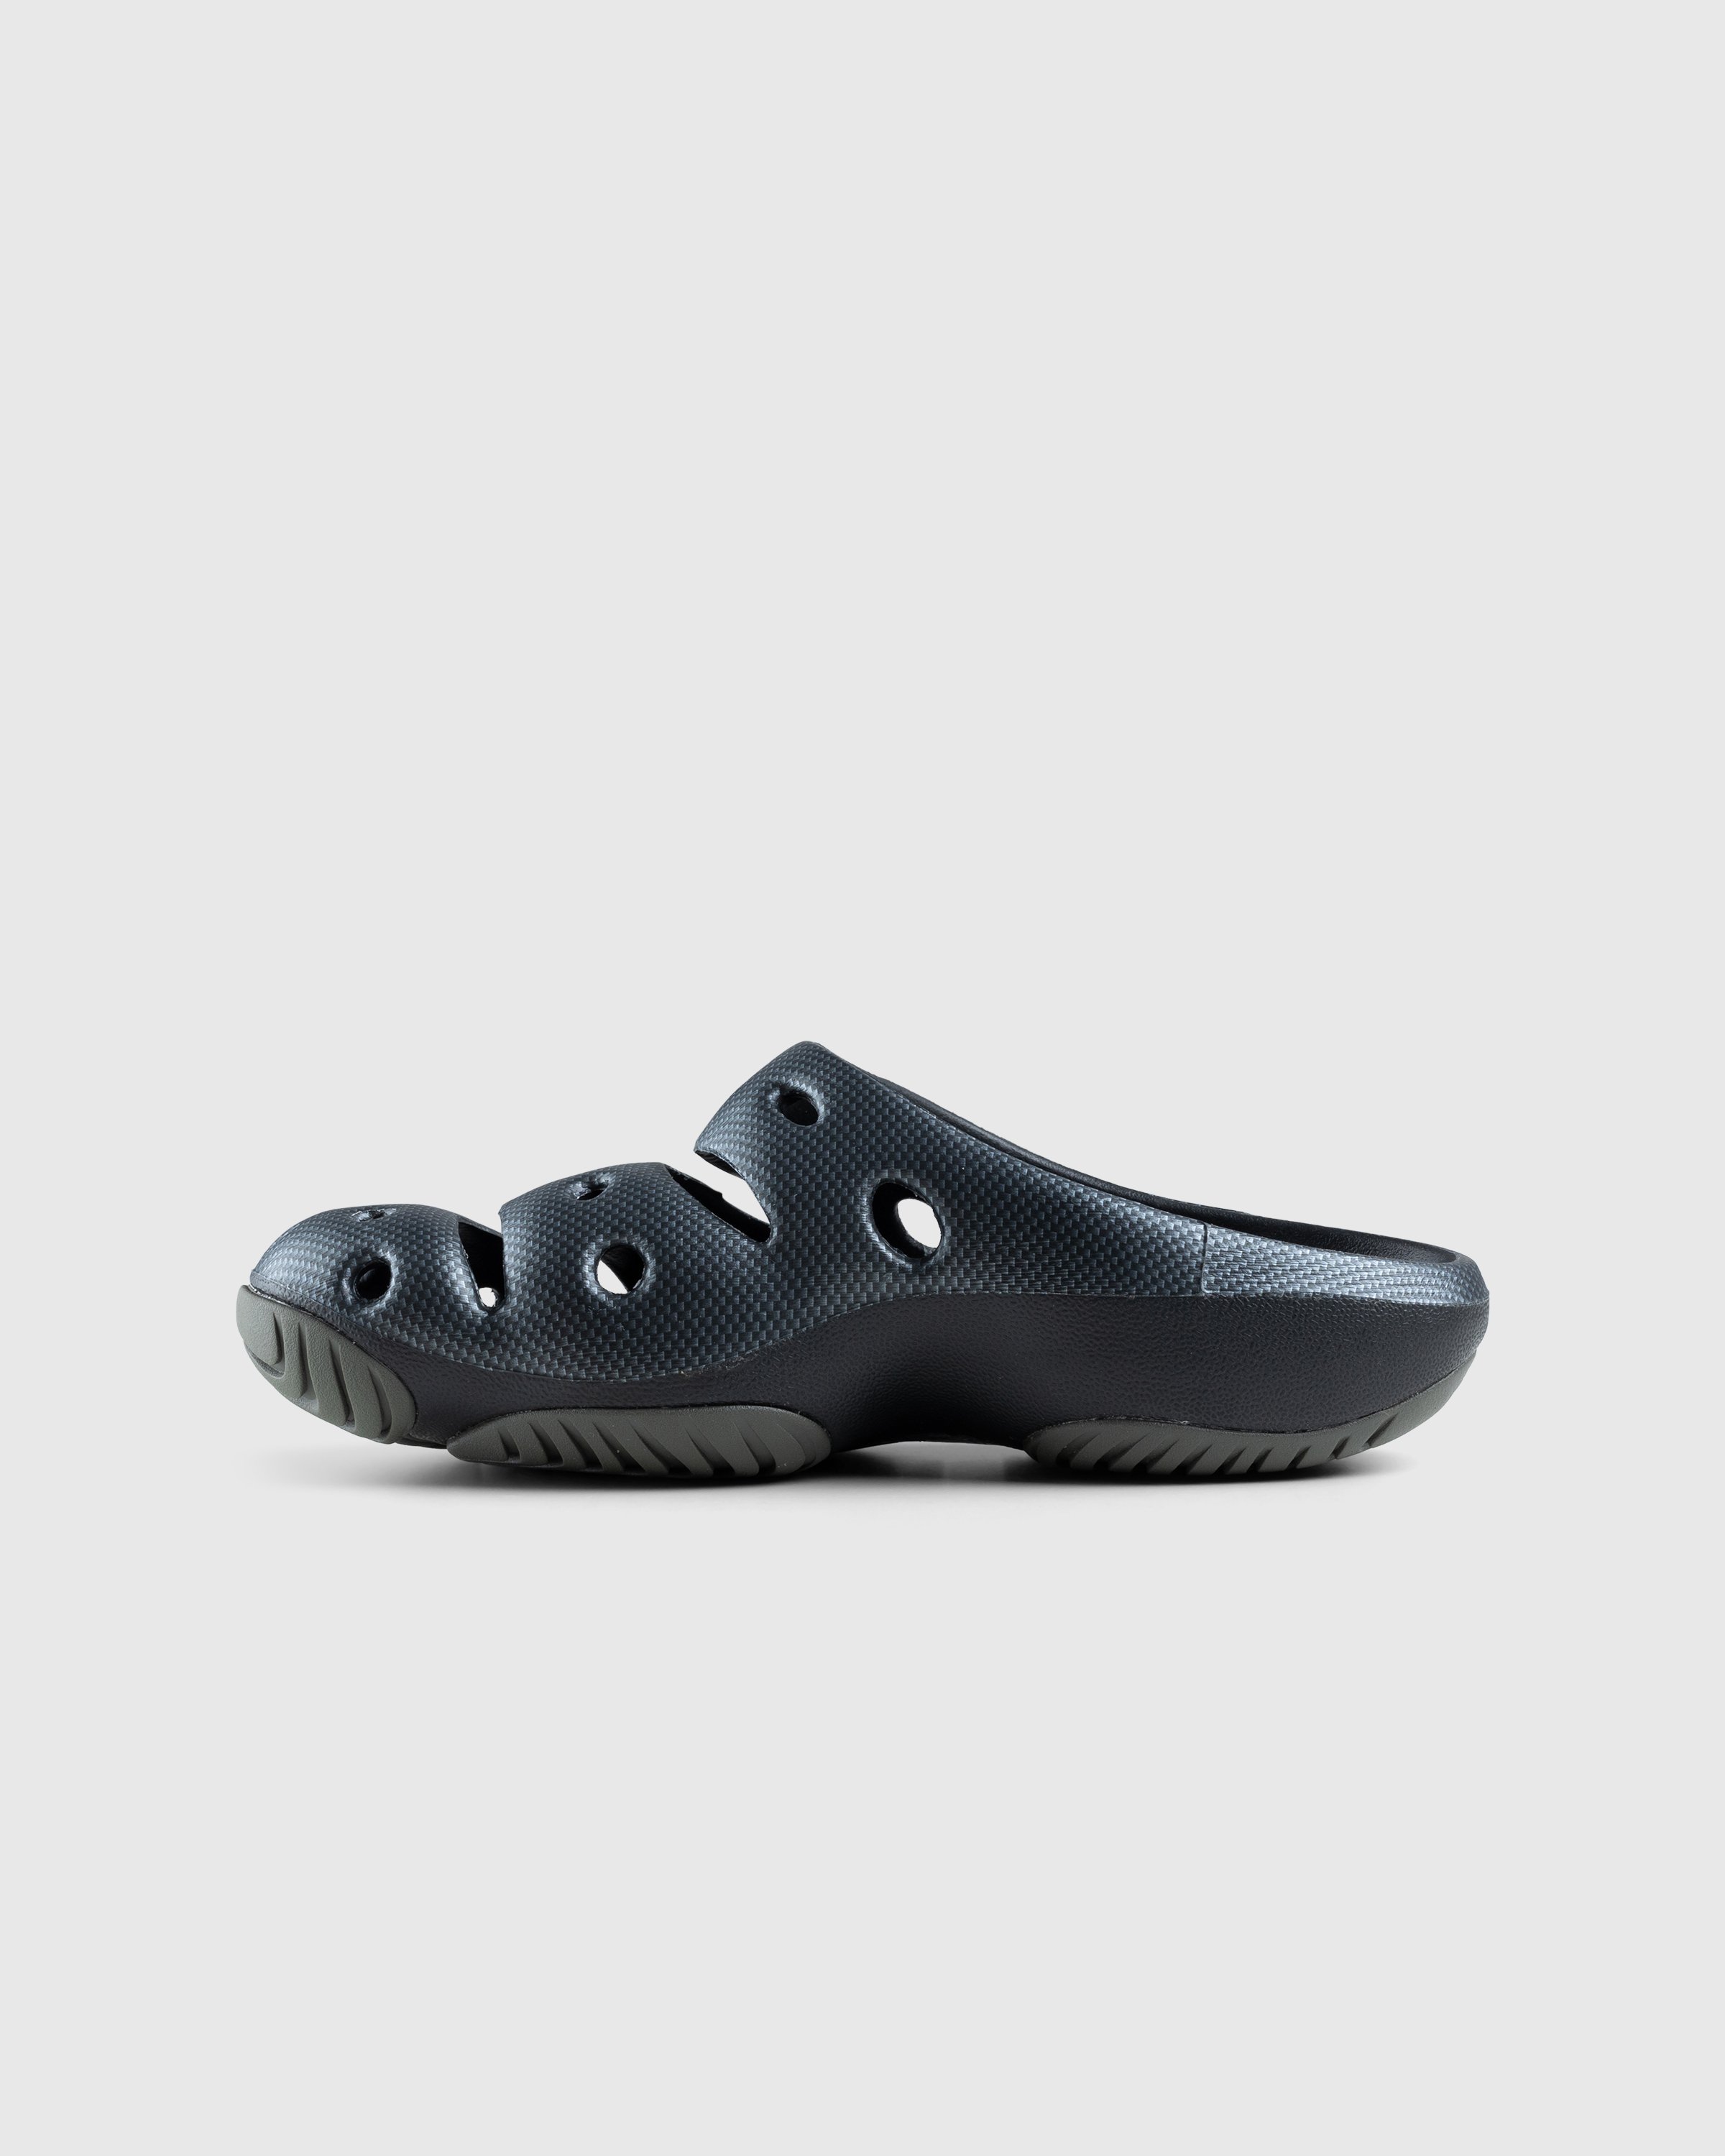 Keen - Yogui Arts Graphite - Footwear - Grey - Image 2